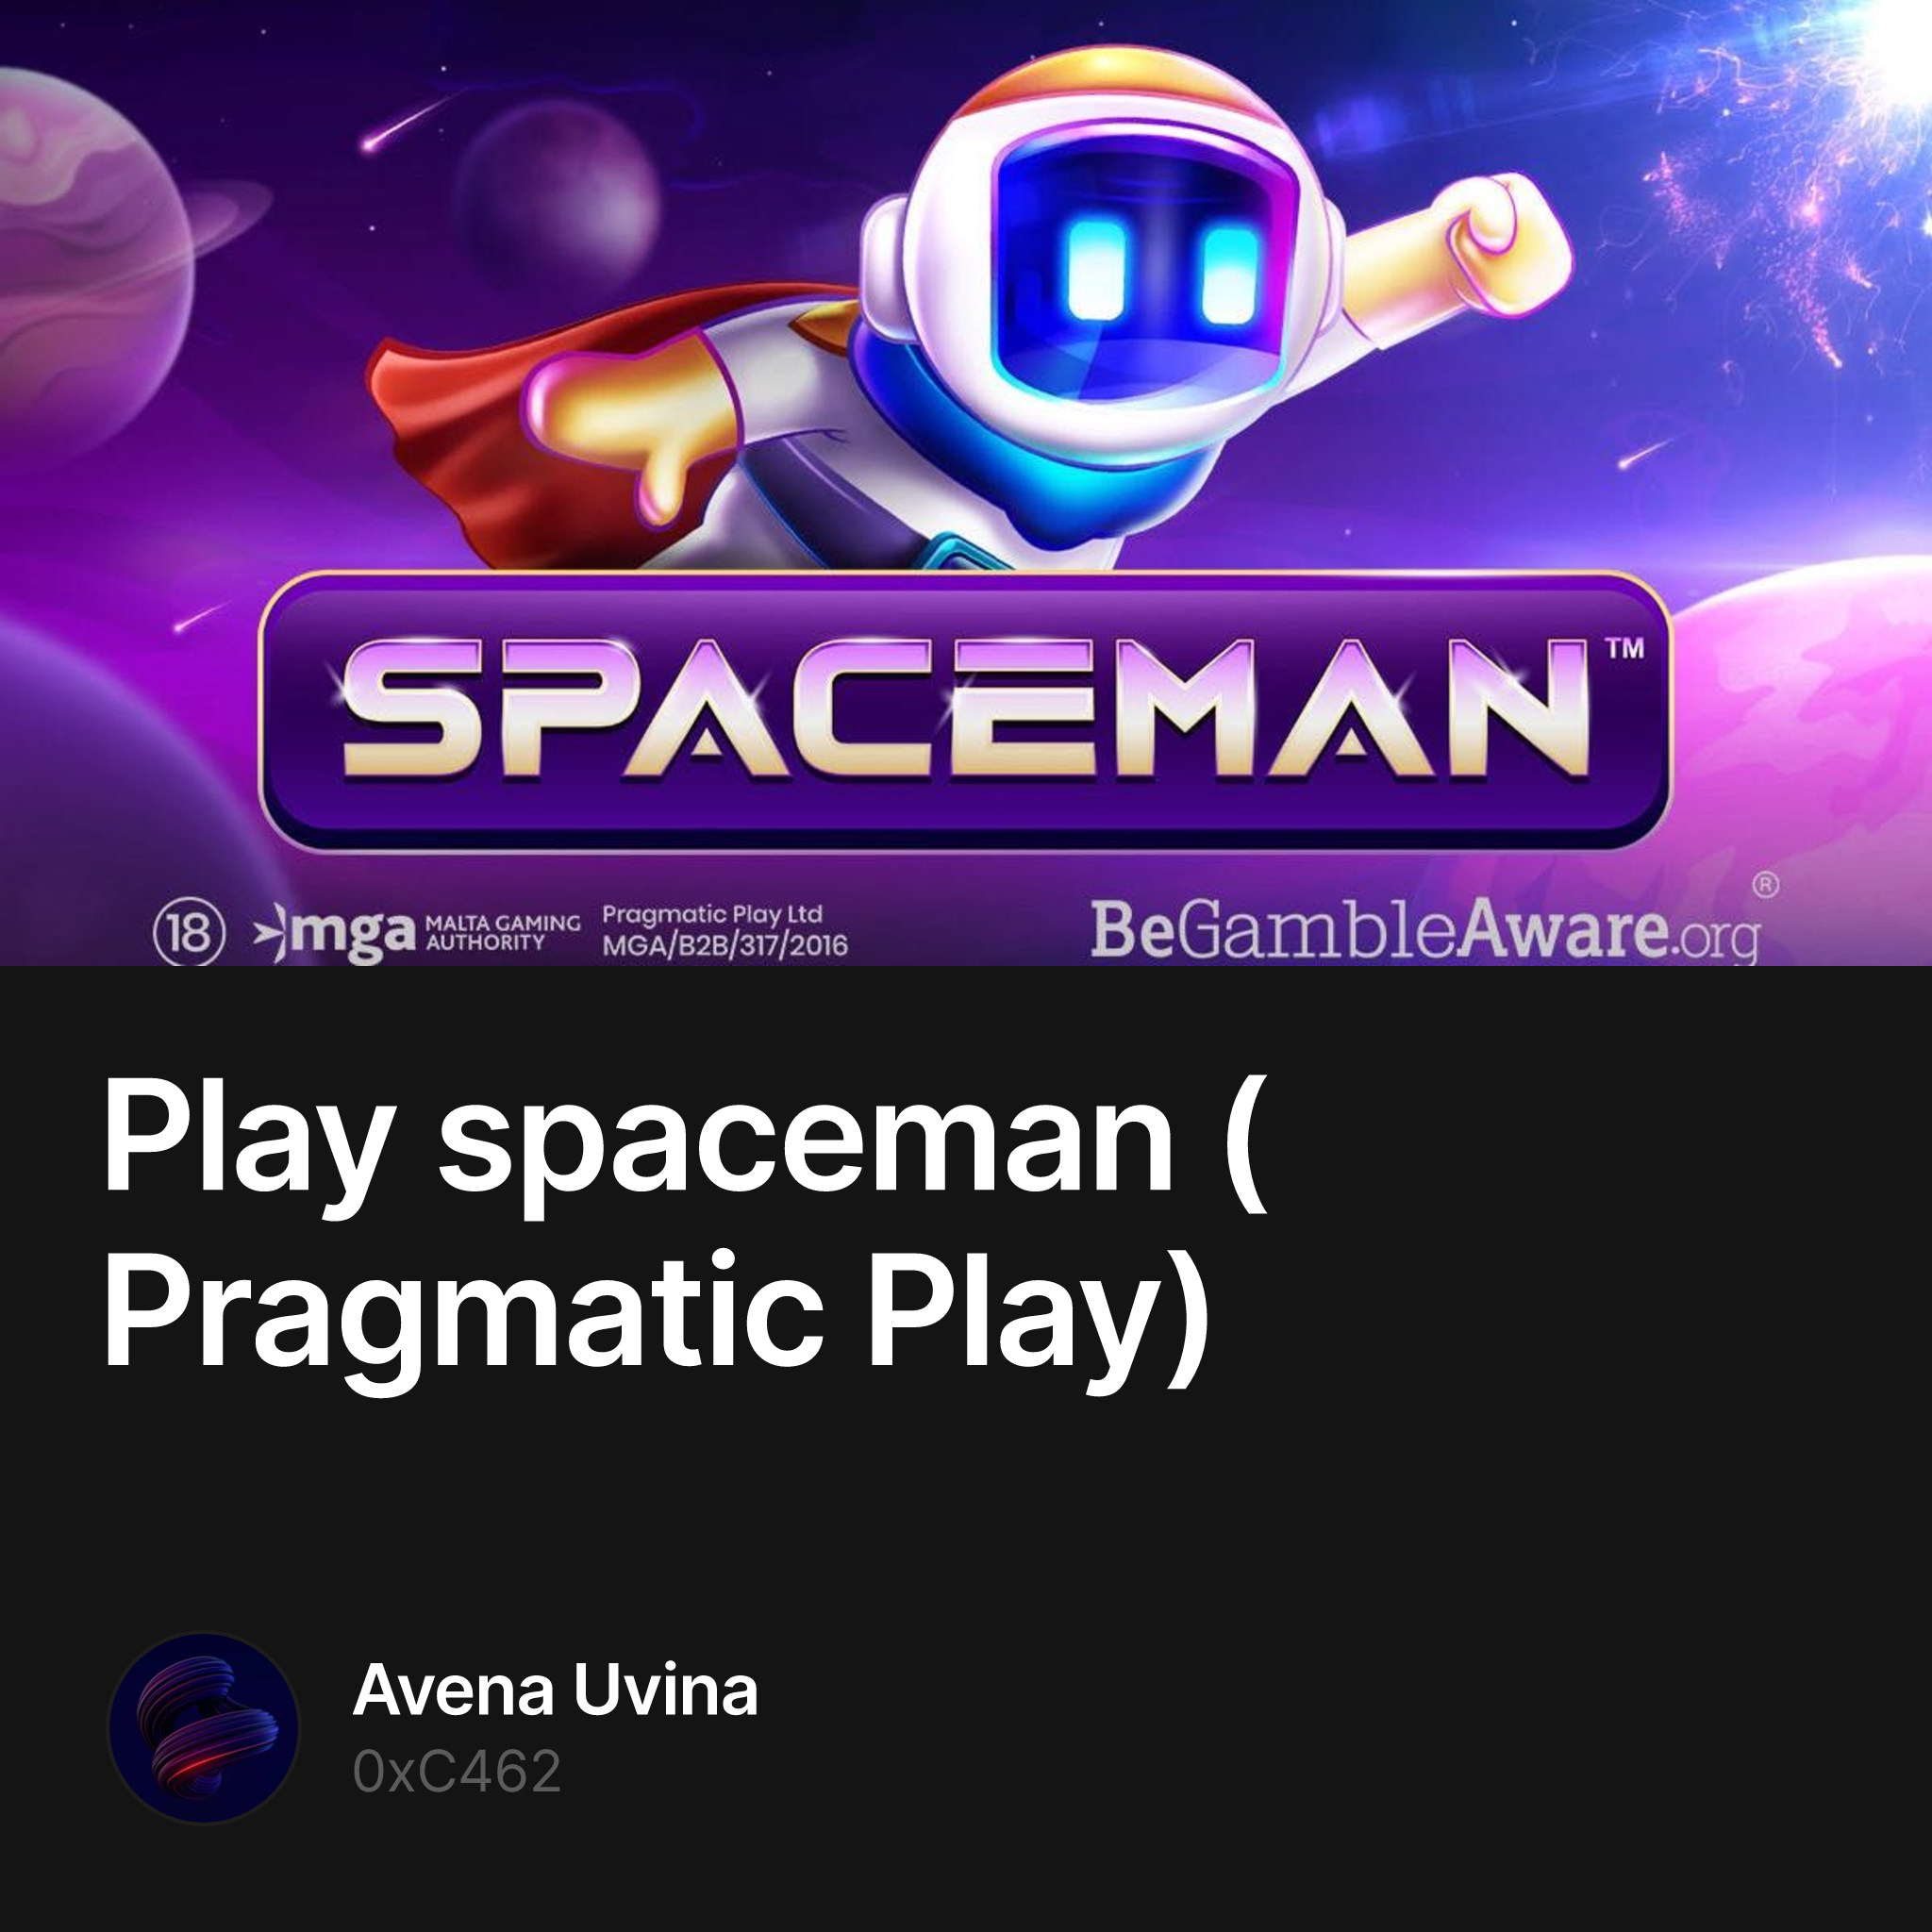 Spaceman Crash Game Review, Maximum Win 5,000x